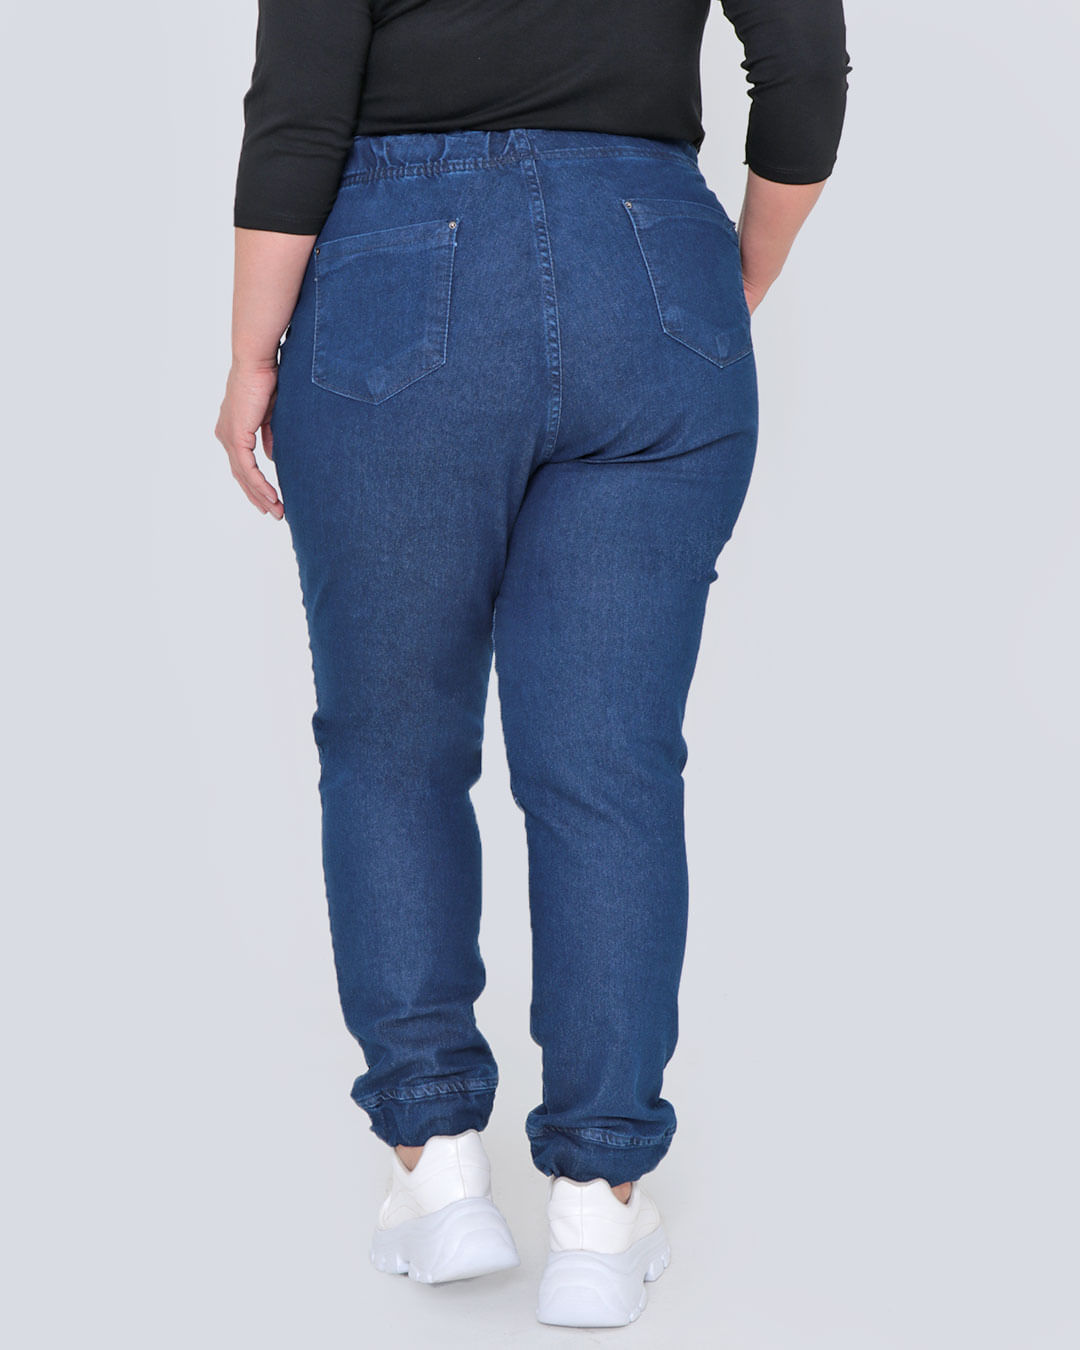 Calca-Jeans-Feminina-Plus-Size-Jogger-Azul-Escuro